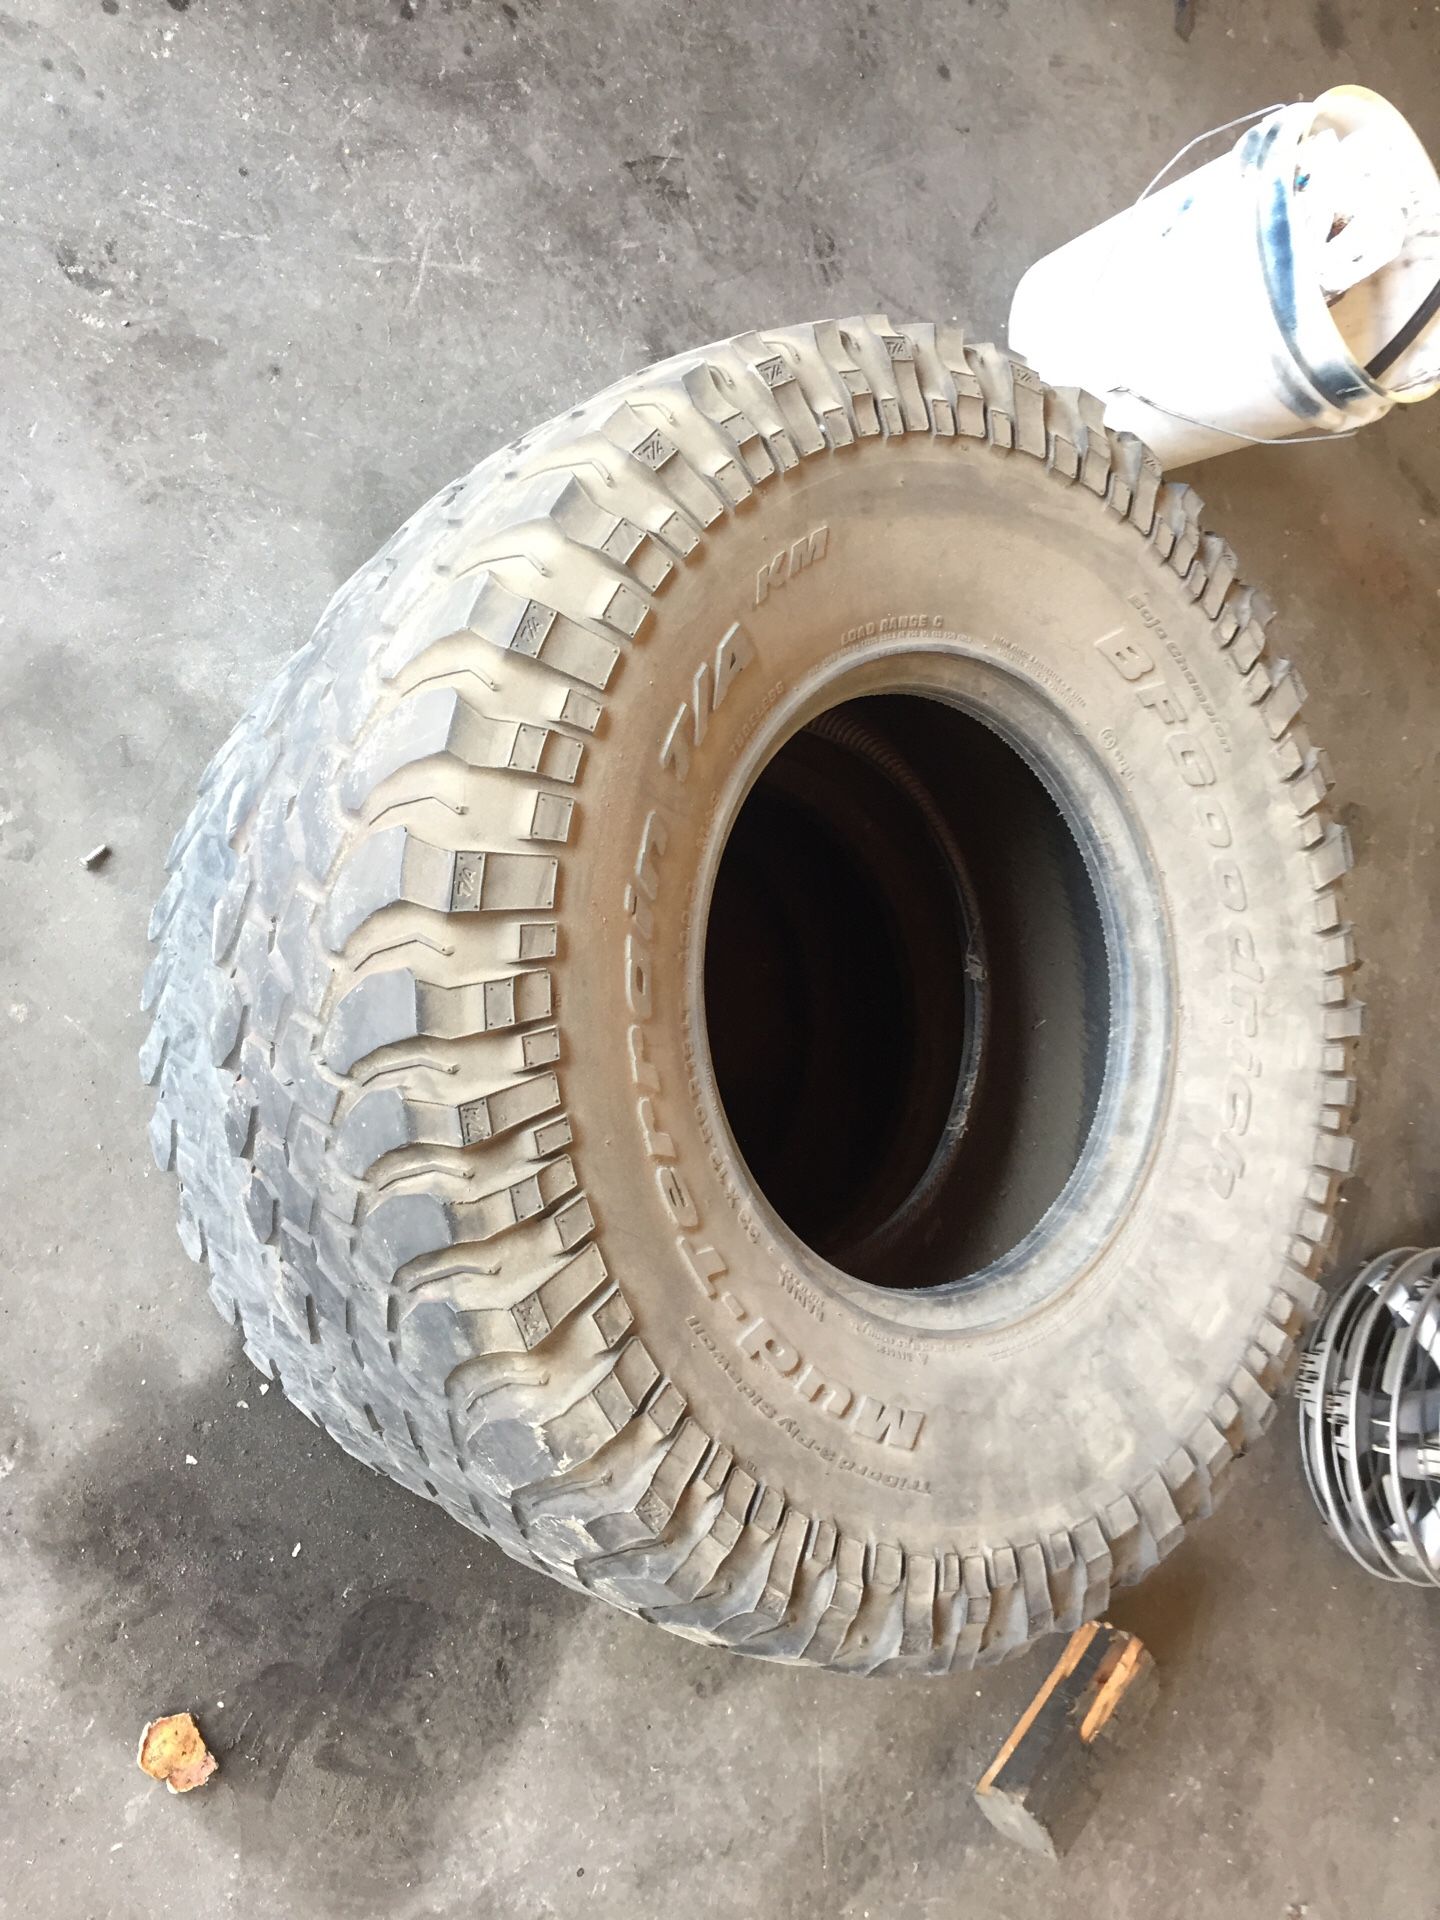 15 inch mud tires